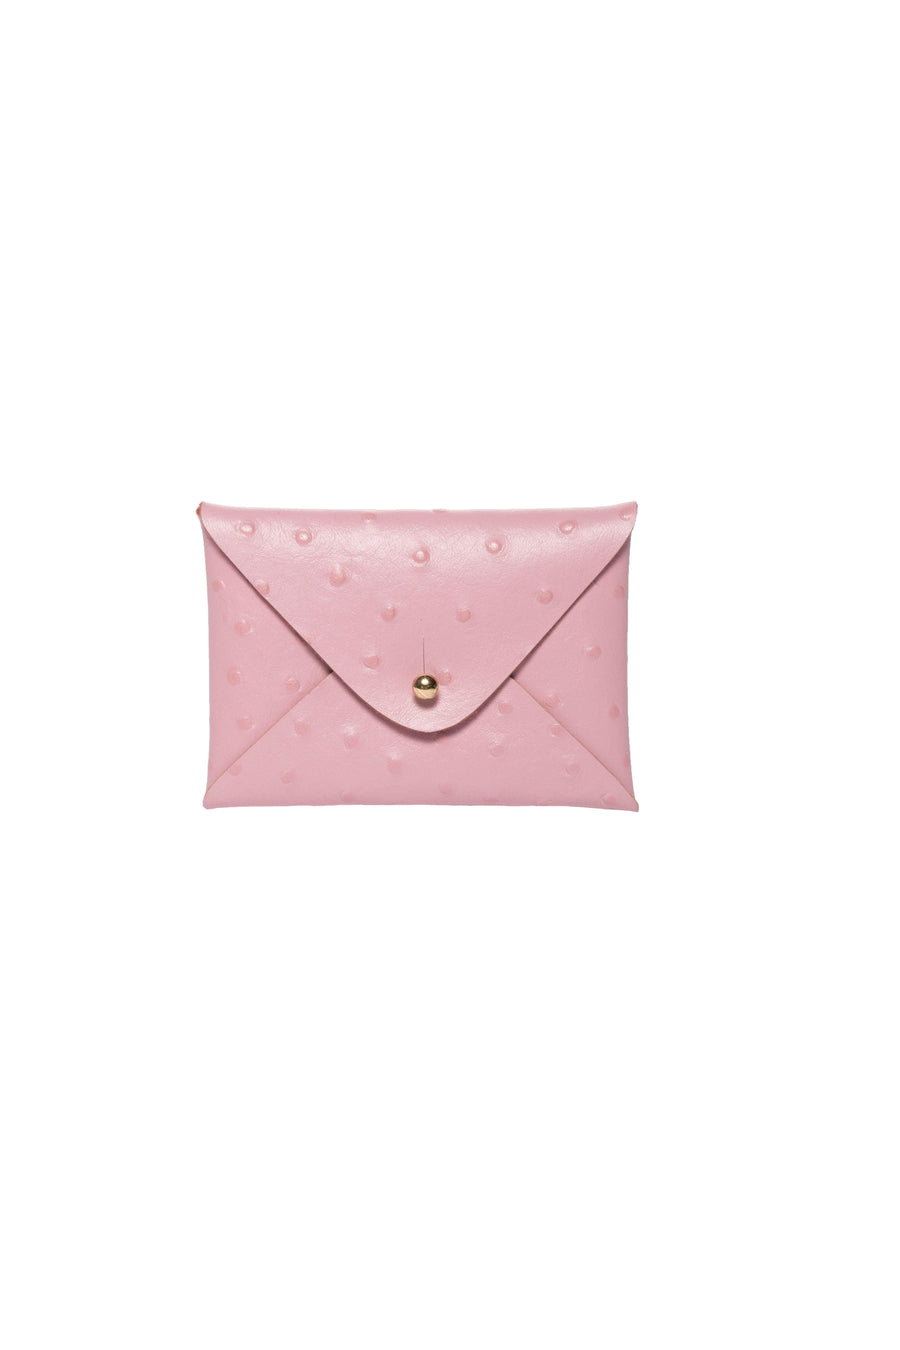 Card Holder Wallet Leather Handmade Pale Pink Gold Button Closure Ladicani Design